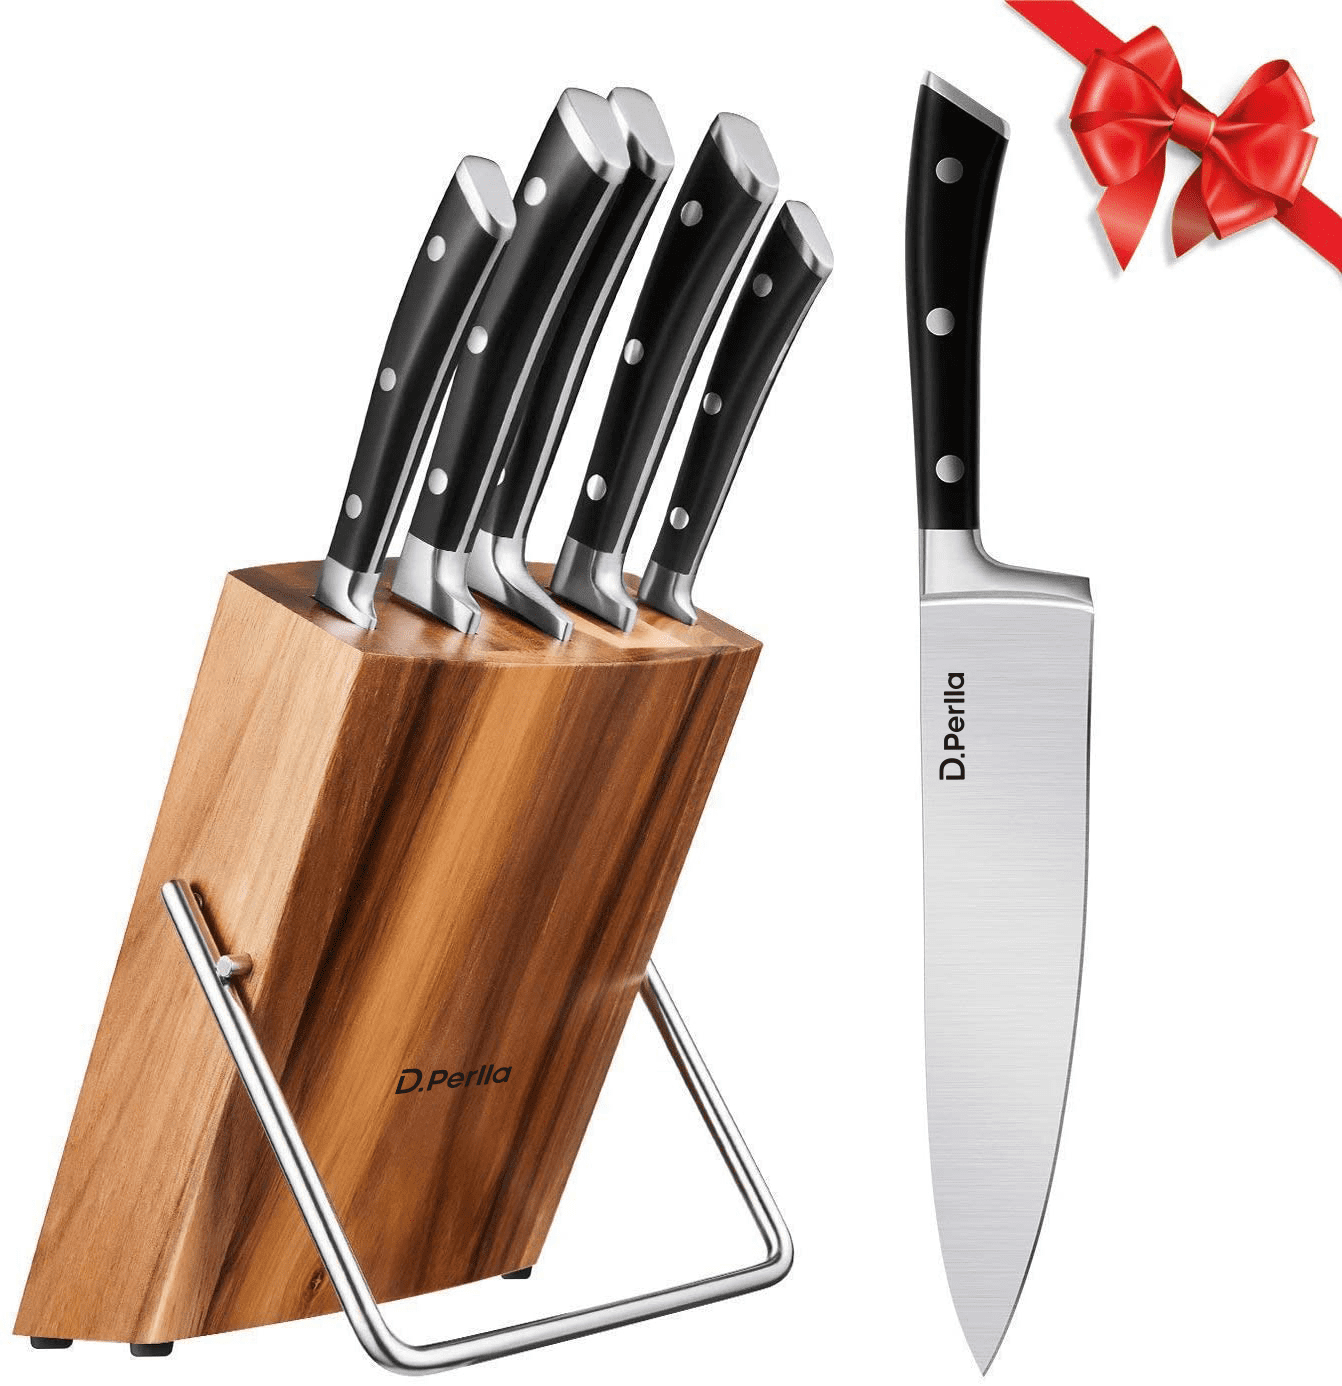 FETERVIC Knife Block Set, 12pcs Premium Kitchen Knife Set with Chef Knife, Sharpener and Serrated Steak Knives, Ultra Sharp German Stainless Steel